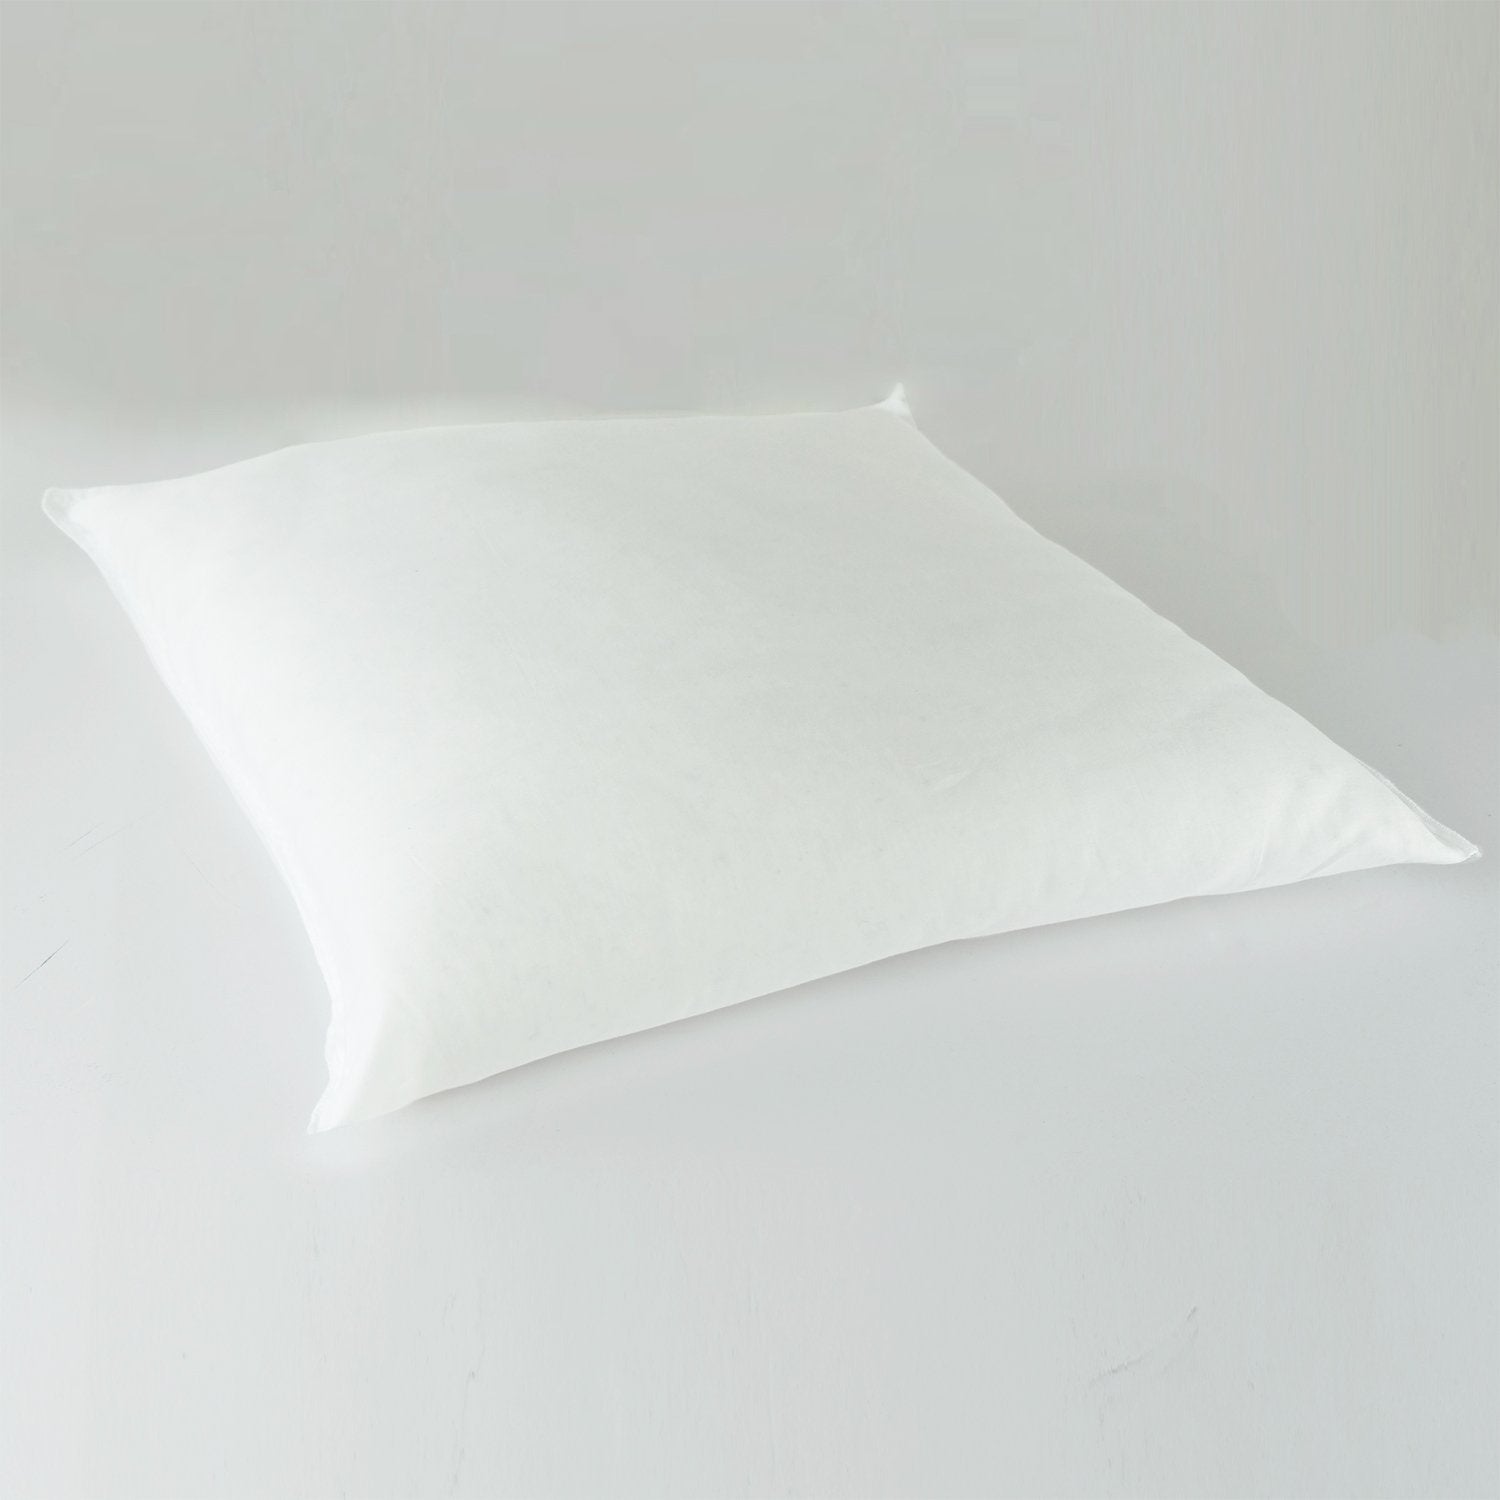 J-Life Tombo Red Zabuton Floor Pillow_Pillows & Shams_Zabuton Floor Pillows_100% Cotton_Reversible_Handmade